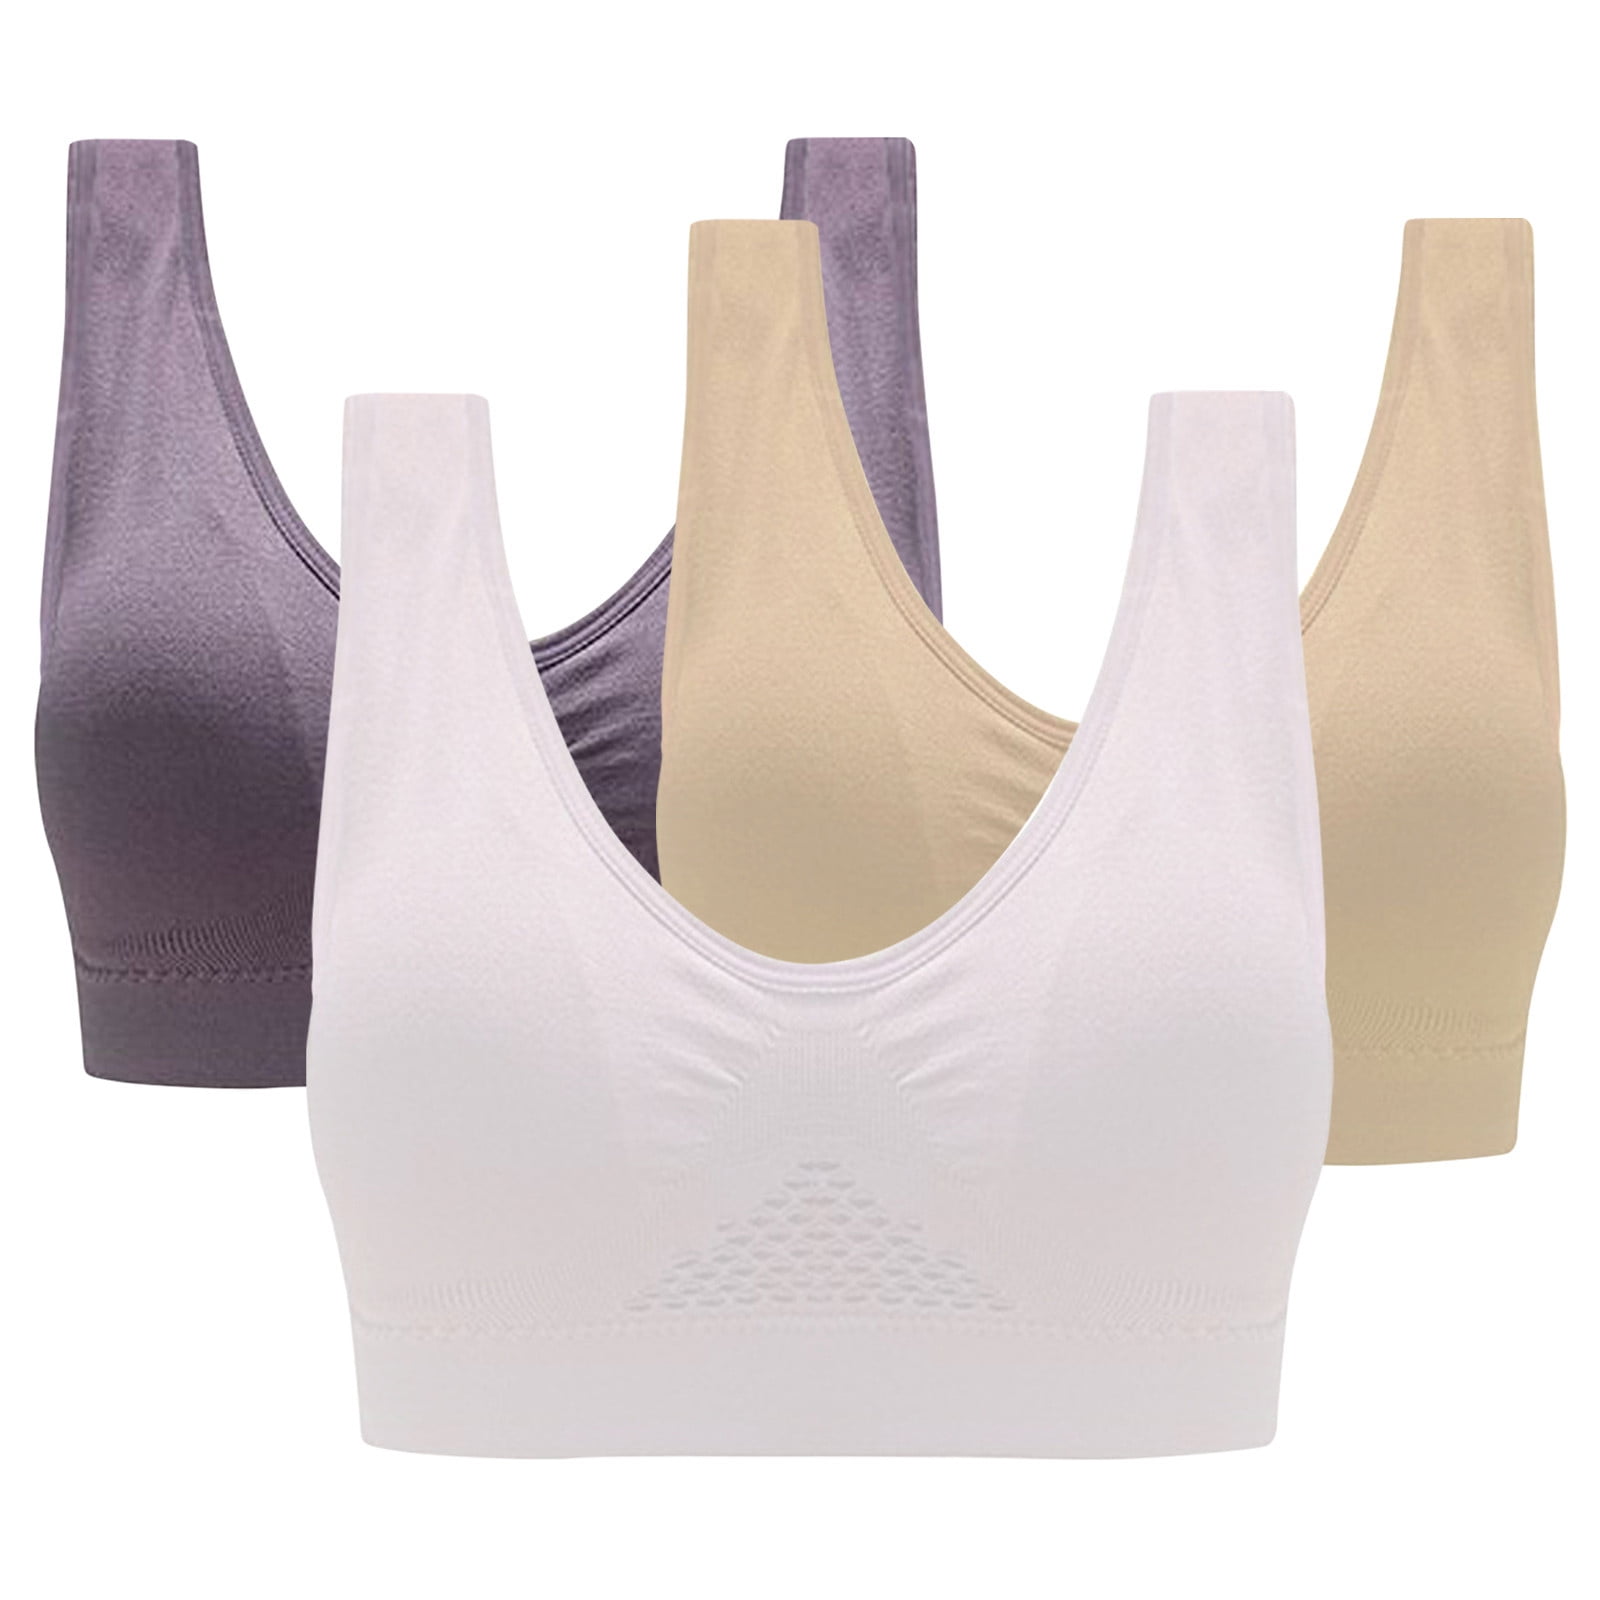 TOBWIZU Plus Size Sports Bra Pack for Women Seamless Padded Yoga U Bralette  Comfortable Soft Everyday Sleep Bras-3pack at  Women's Clothing store